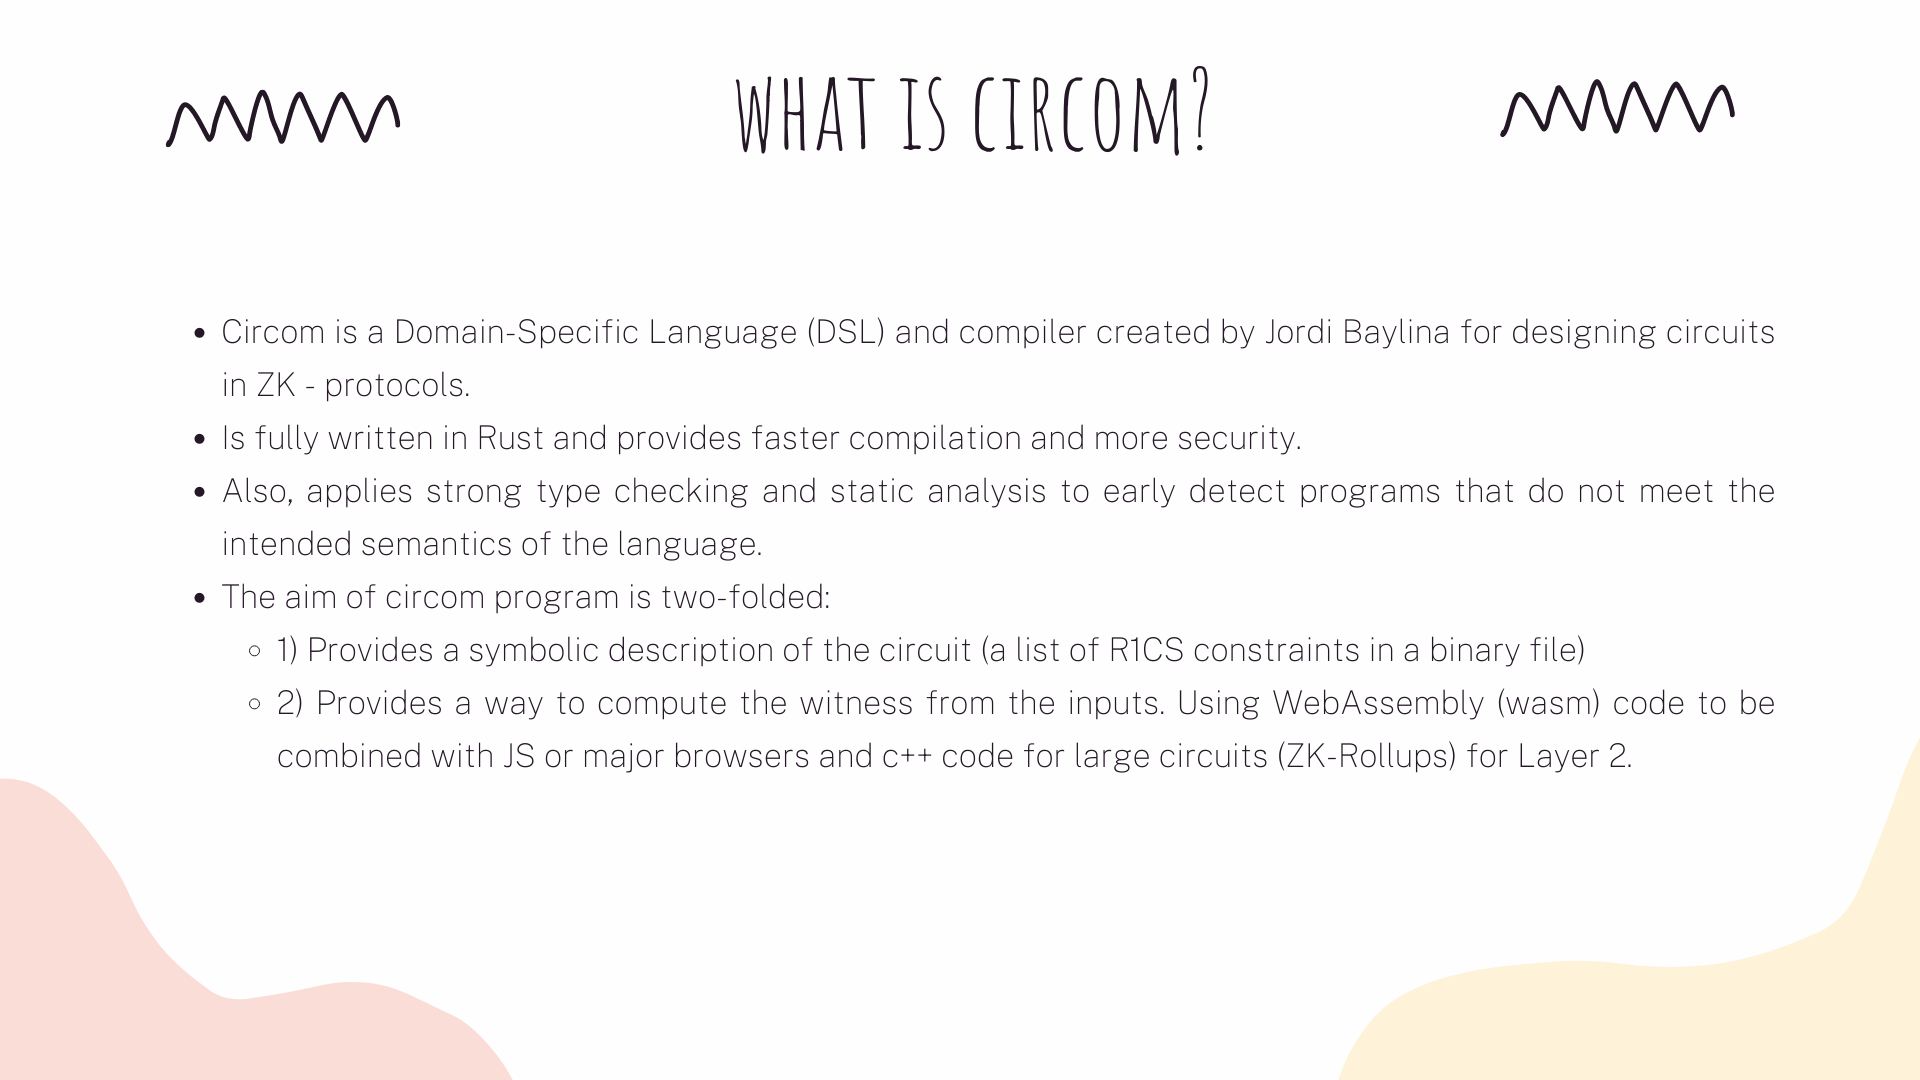 What is circom?